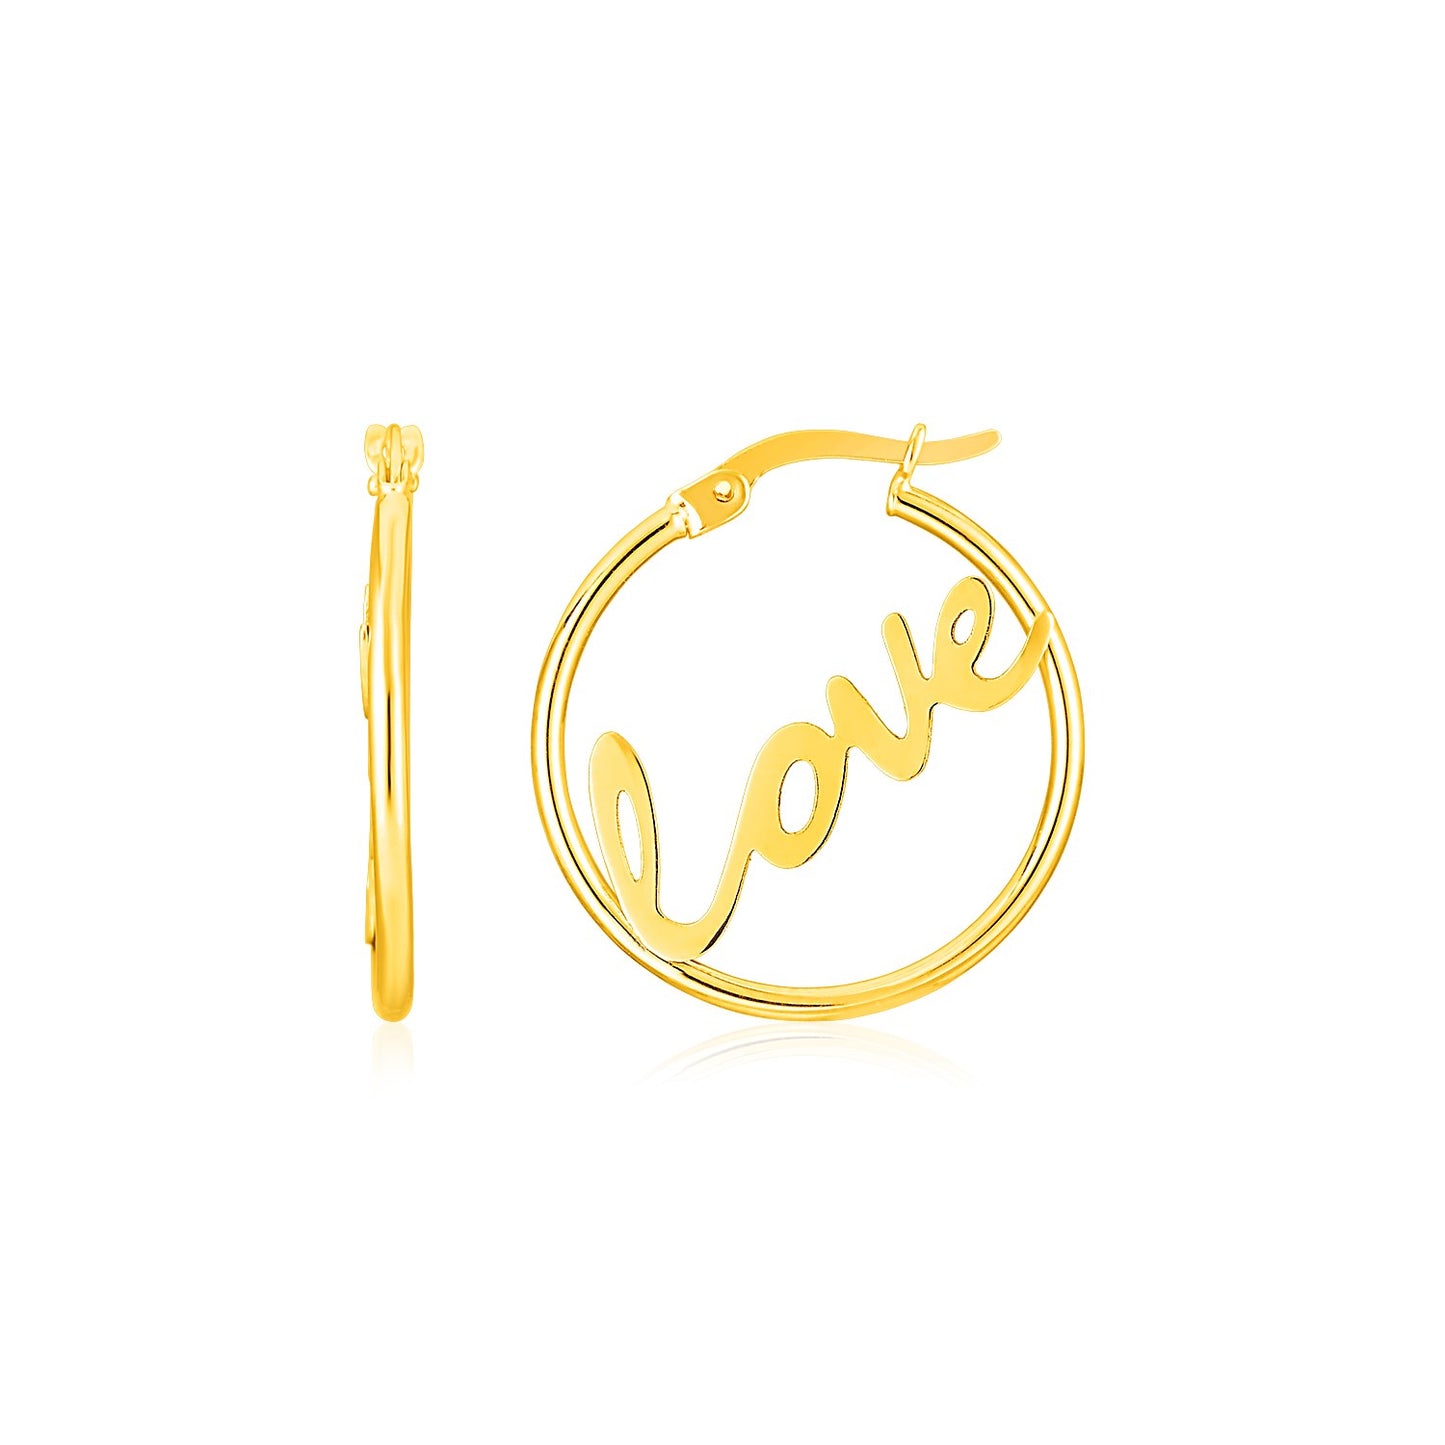 14K Yellow Gold Love Hoop Earrings